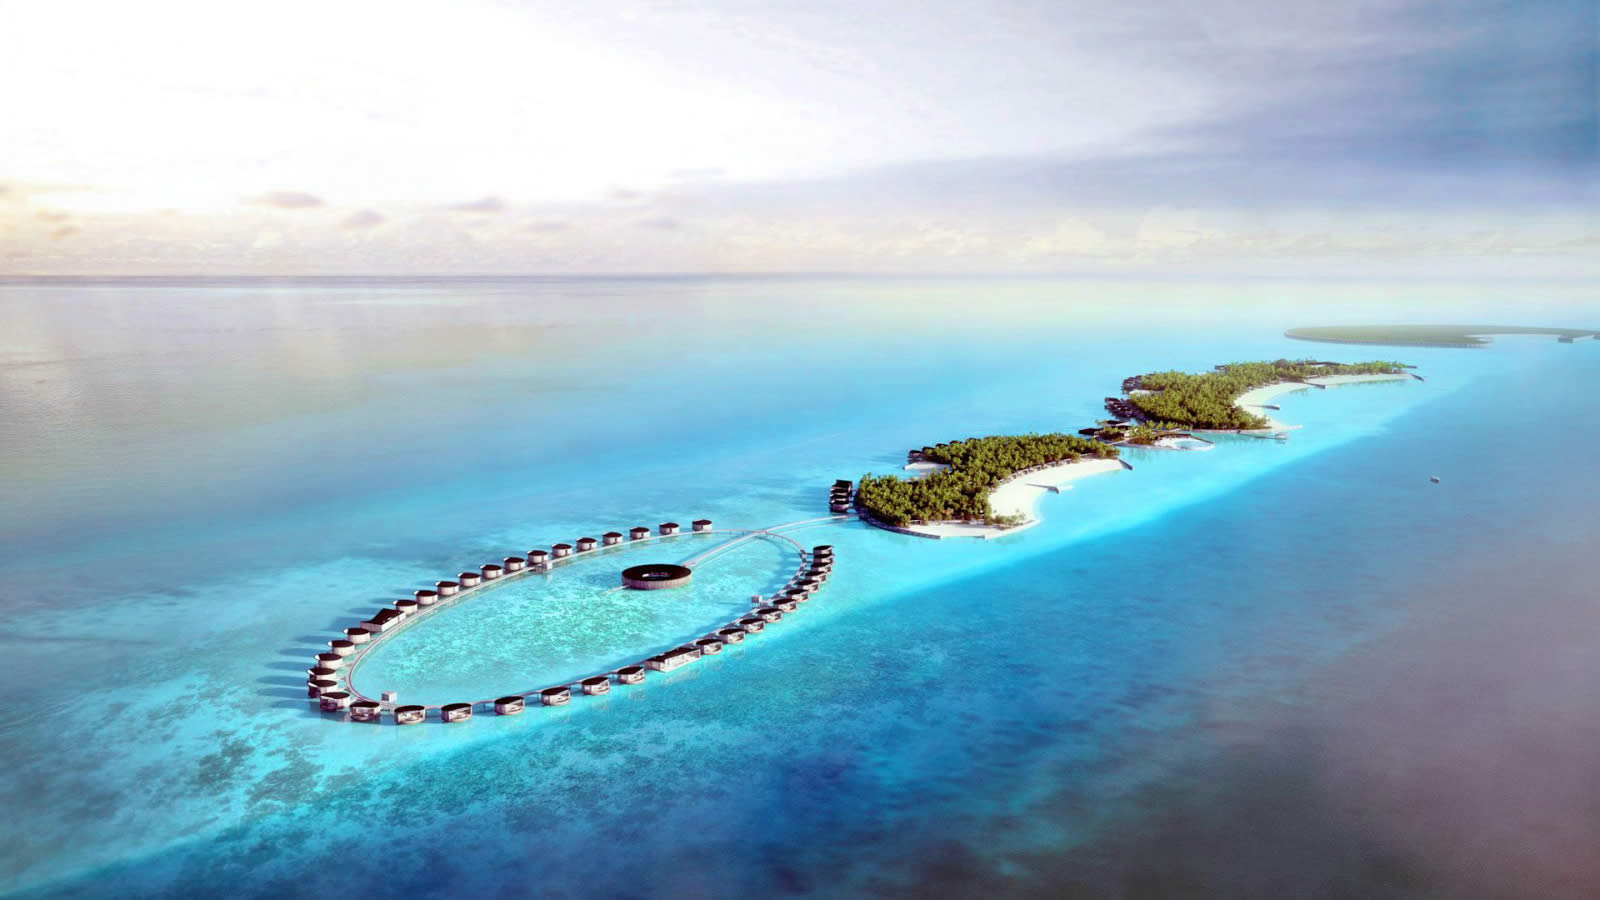 The Ritz-Carlton Maldives, Fari Islands aerial